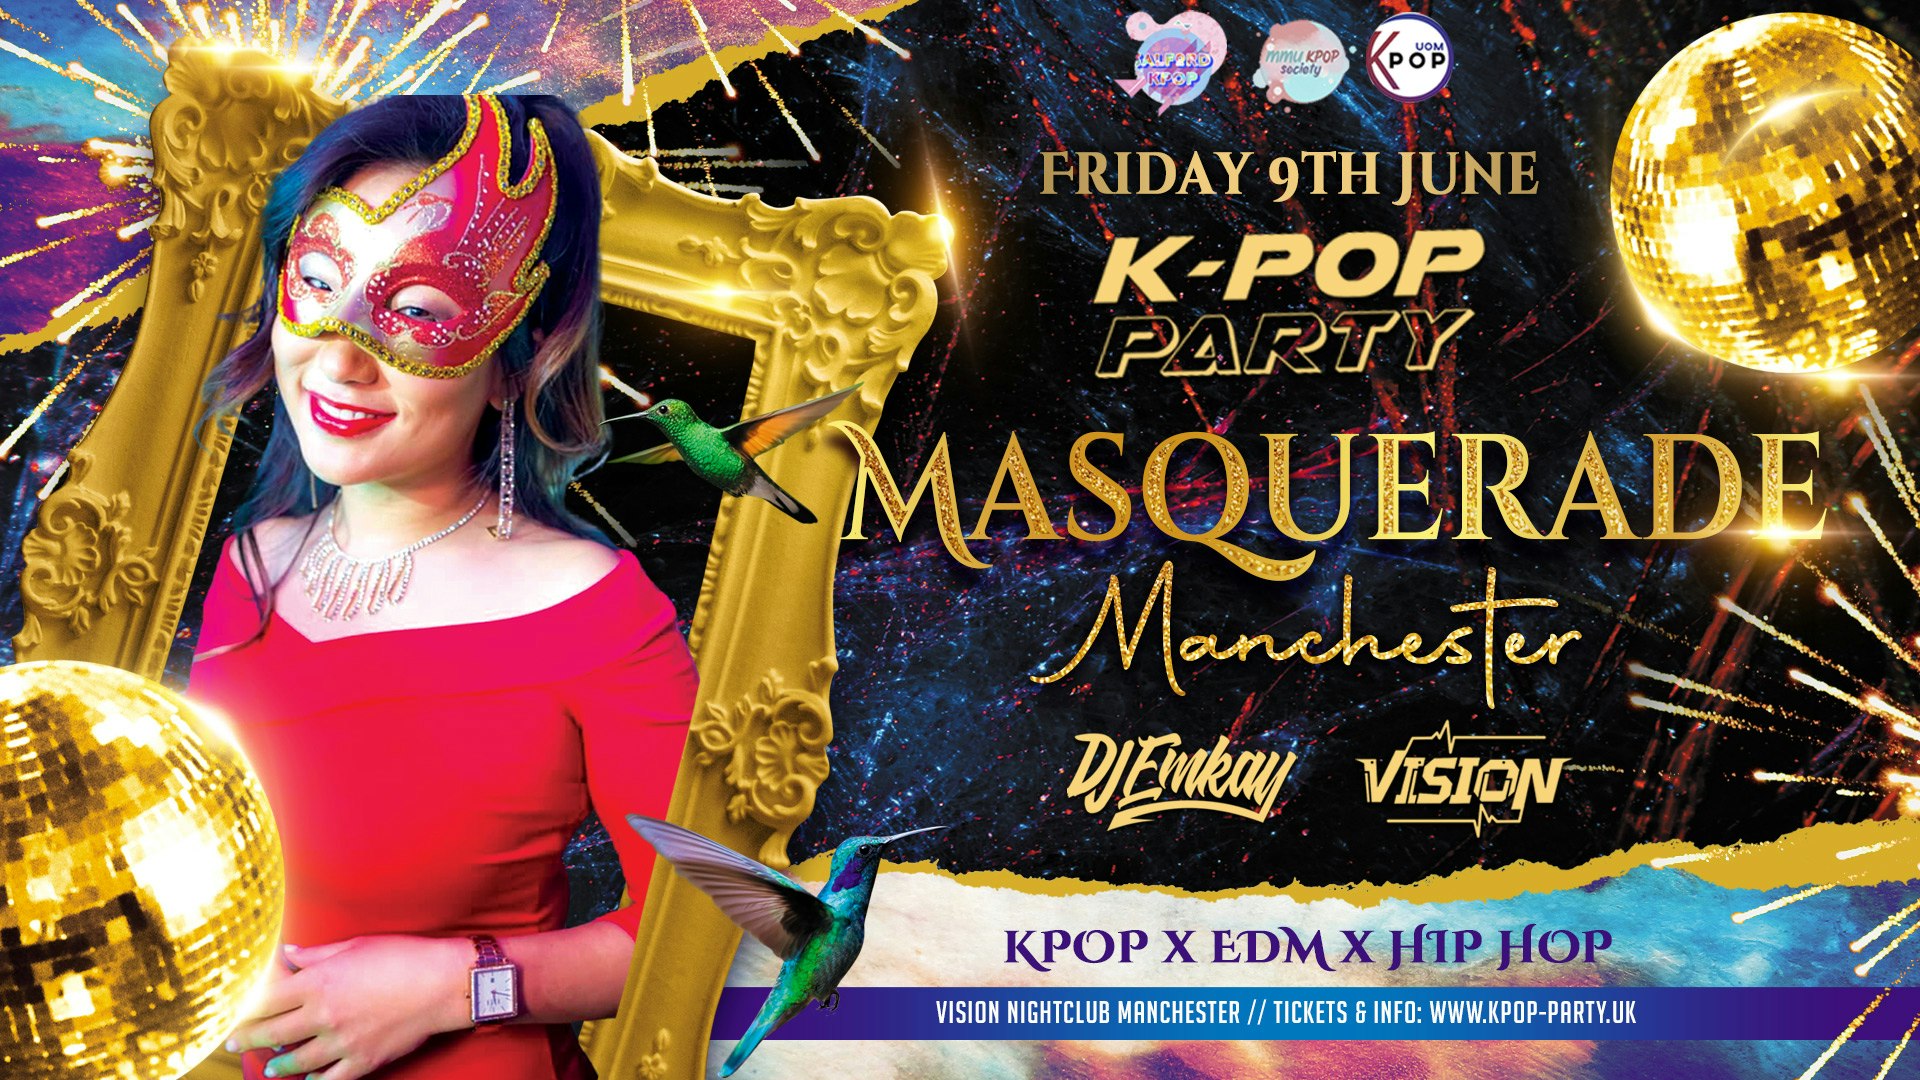 K-Pop Party Masquerade Manchester – KPOP x EDM x HIP HOP  with DJ EMKAY | Friday 9th June